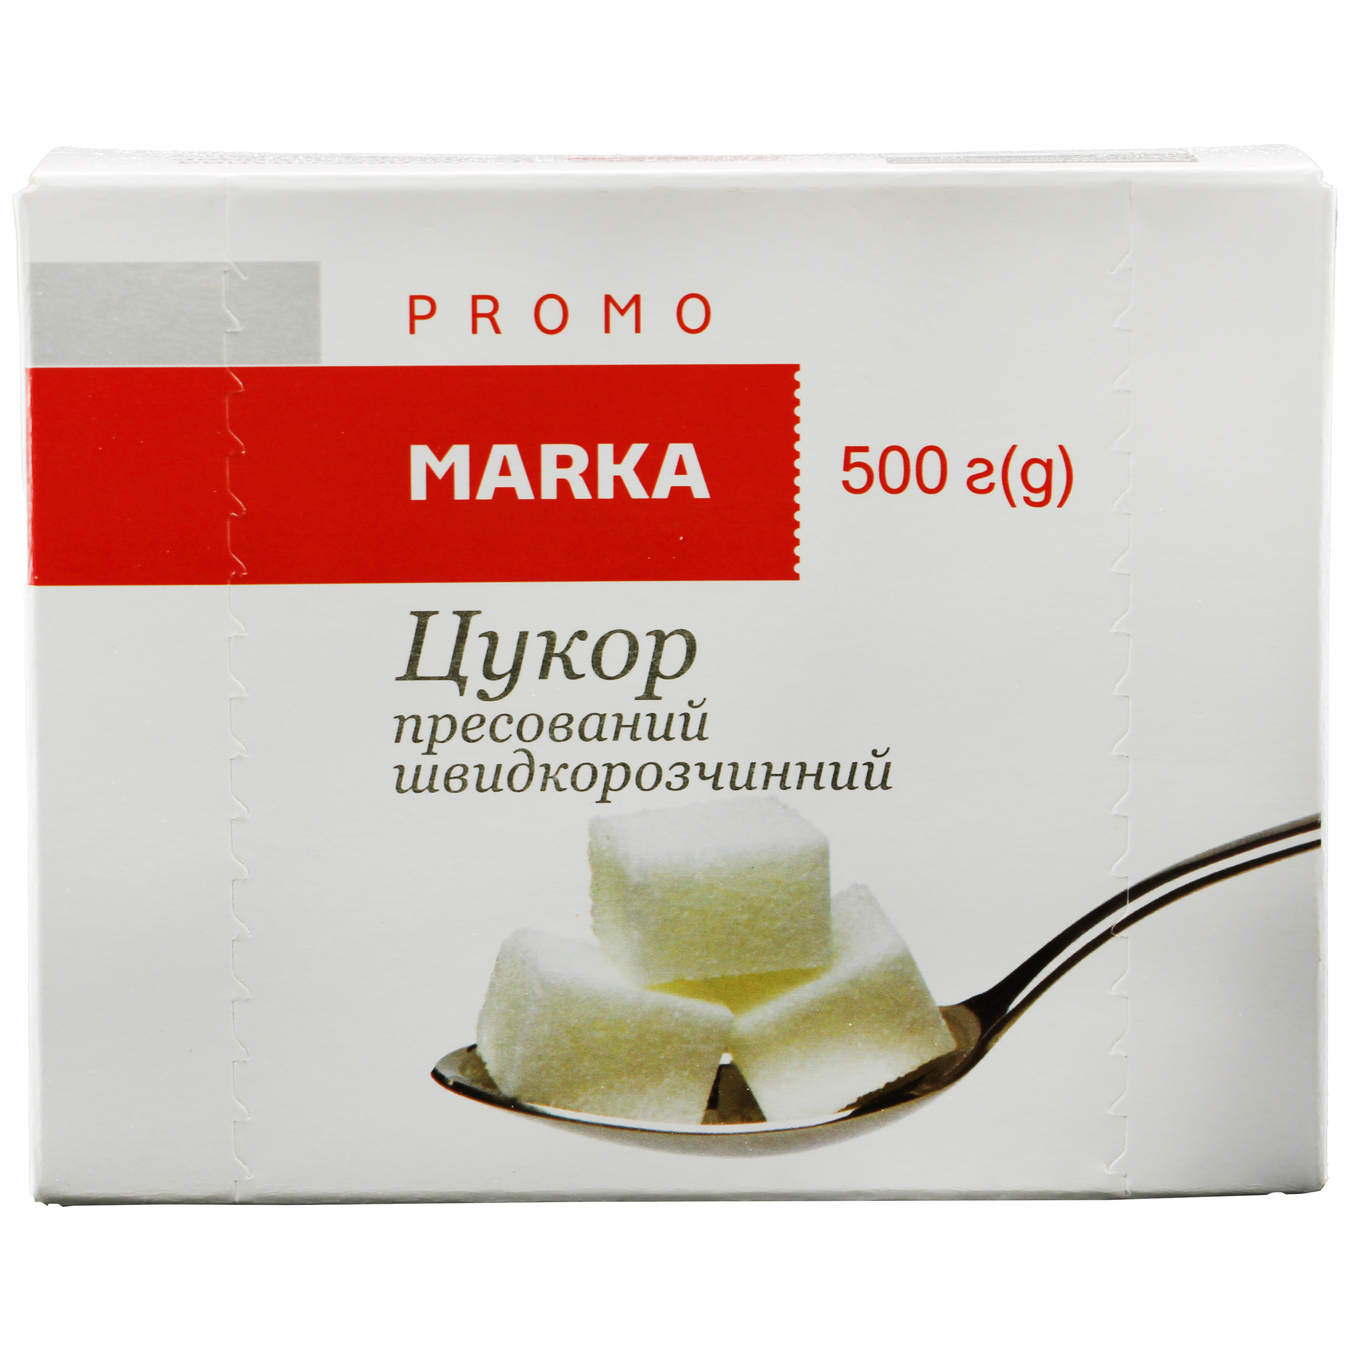 Marka Promo Pressed Instant Sugar 500g